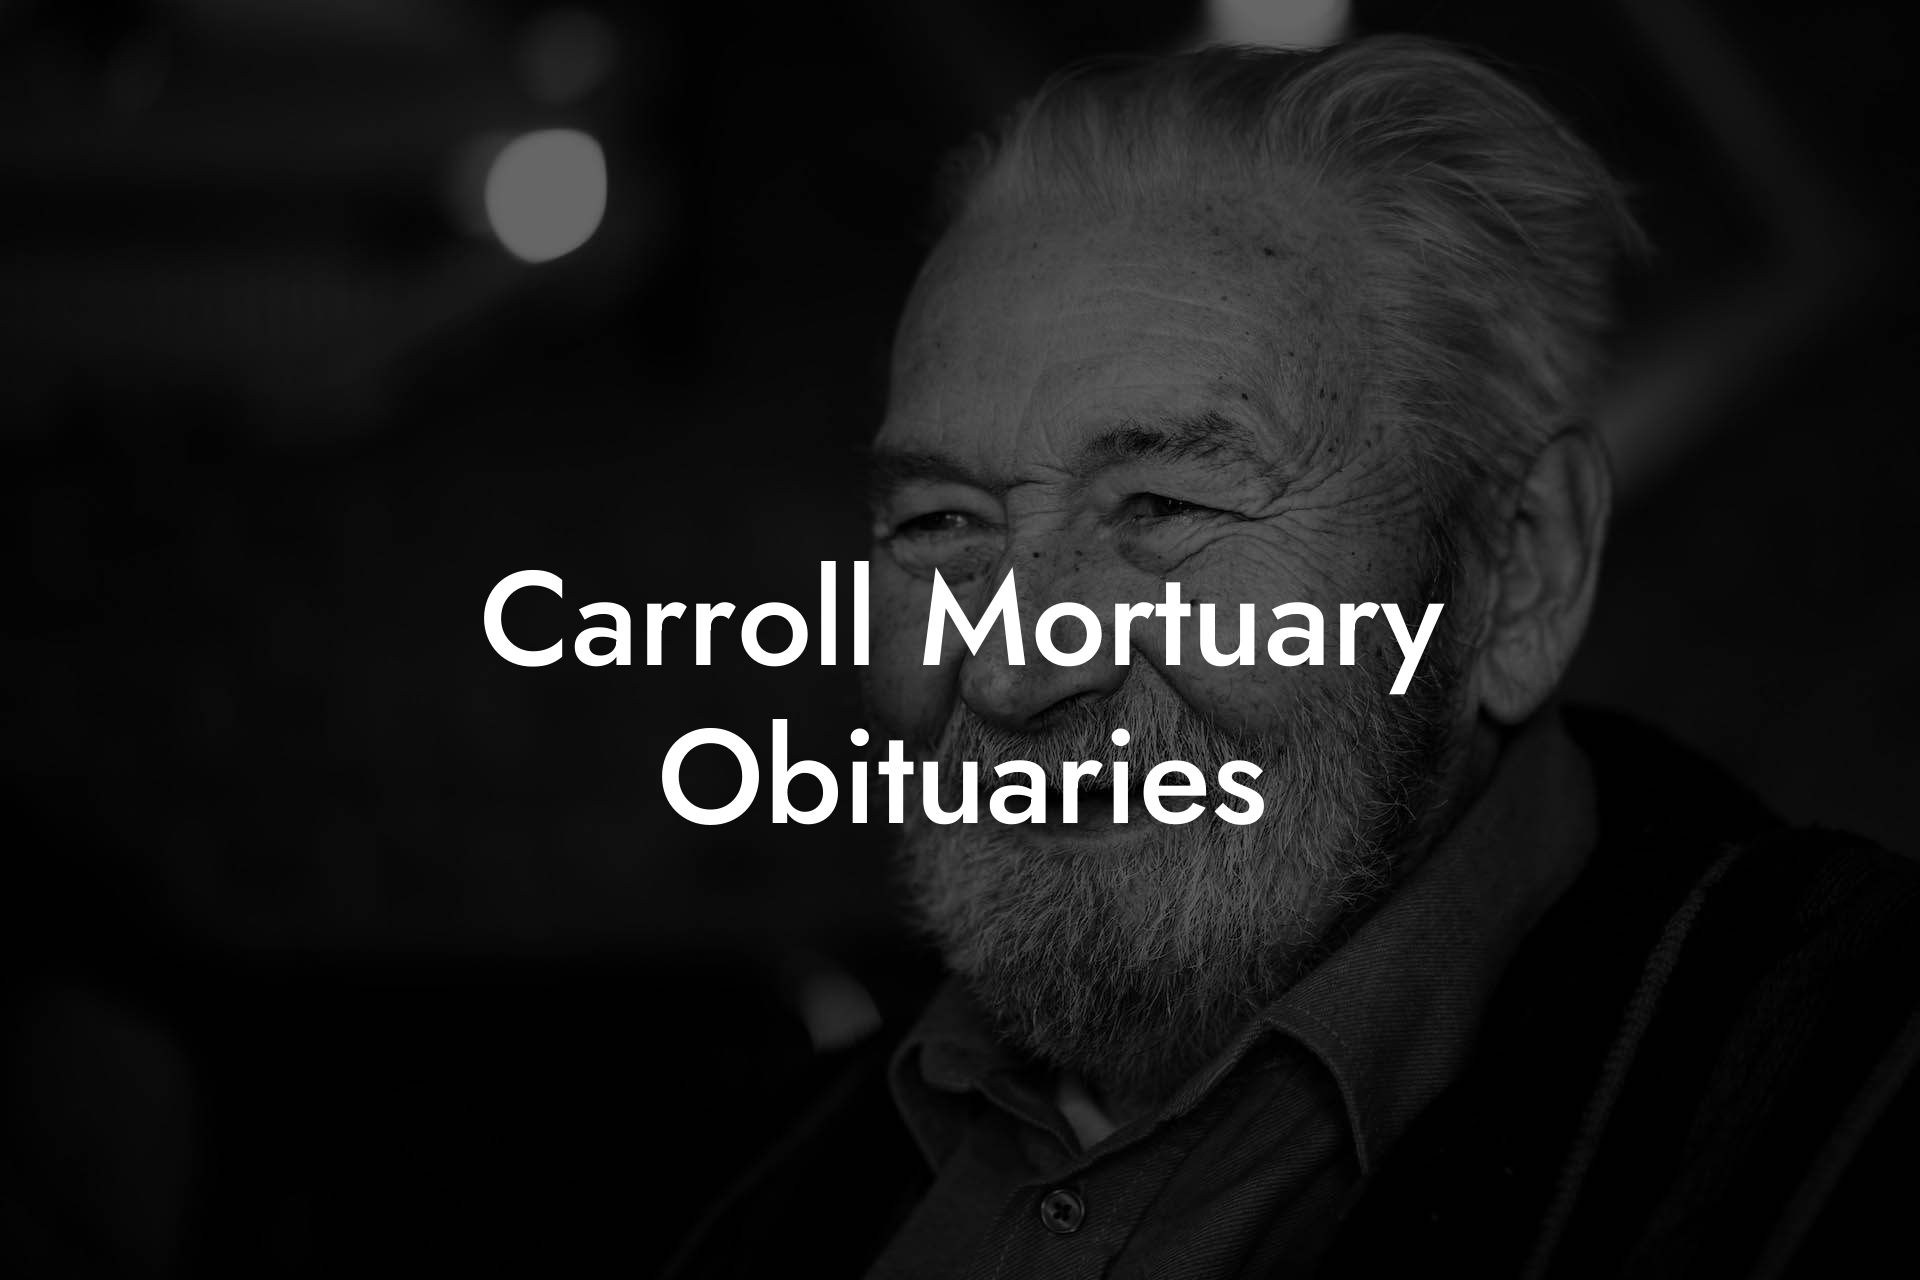 Carroll Mortuary Obituaries